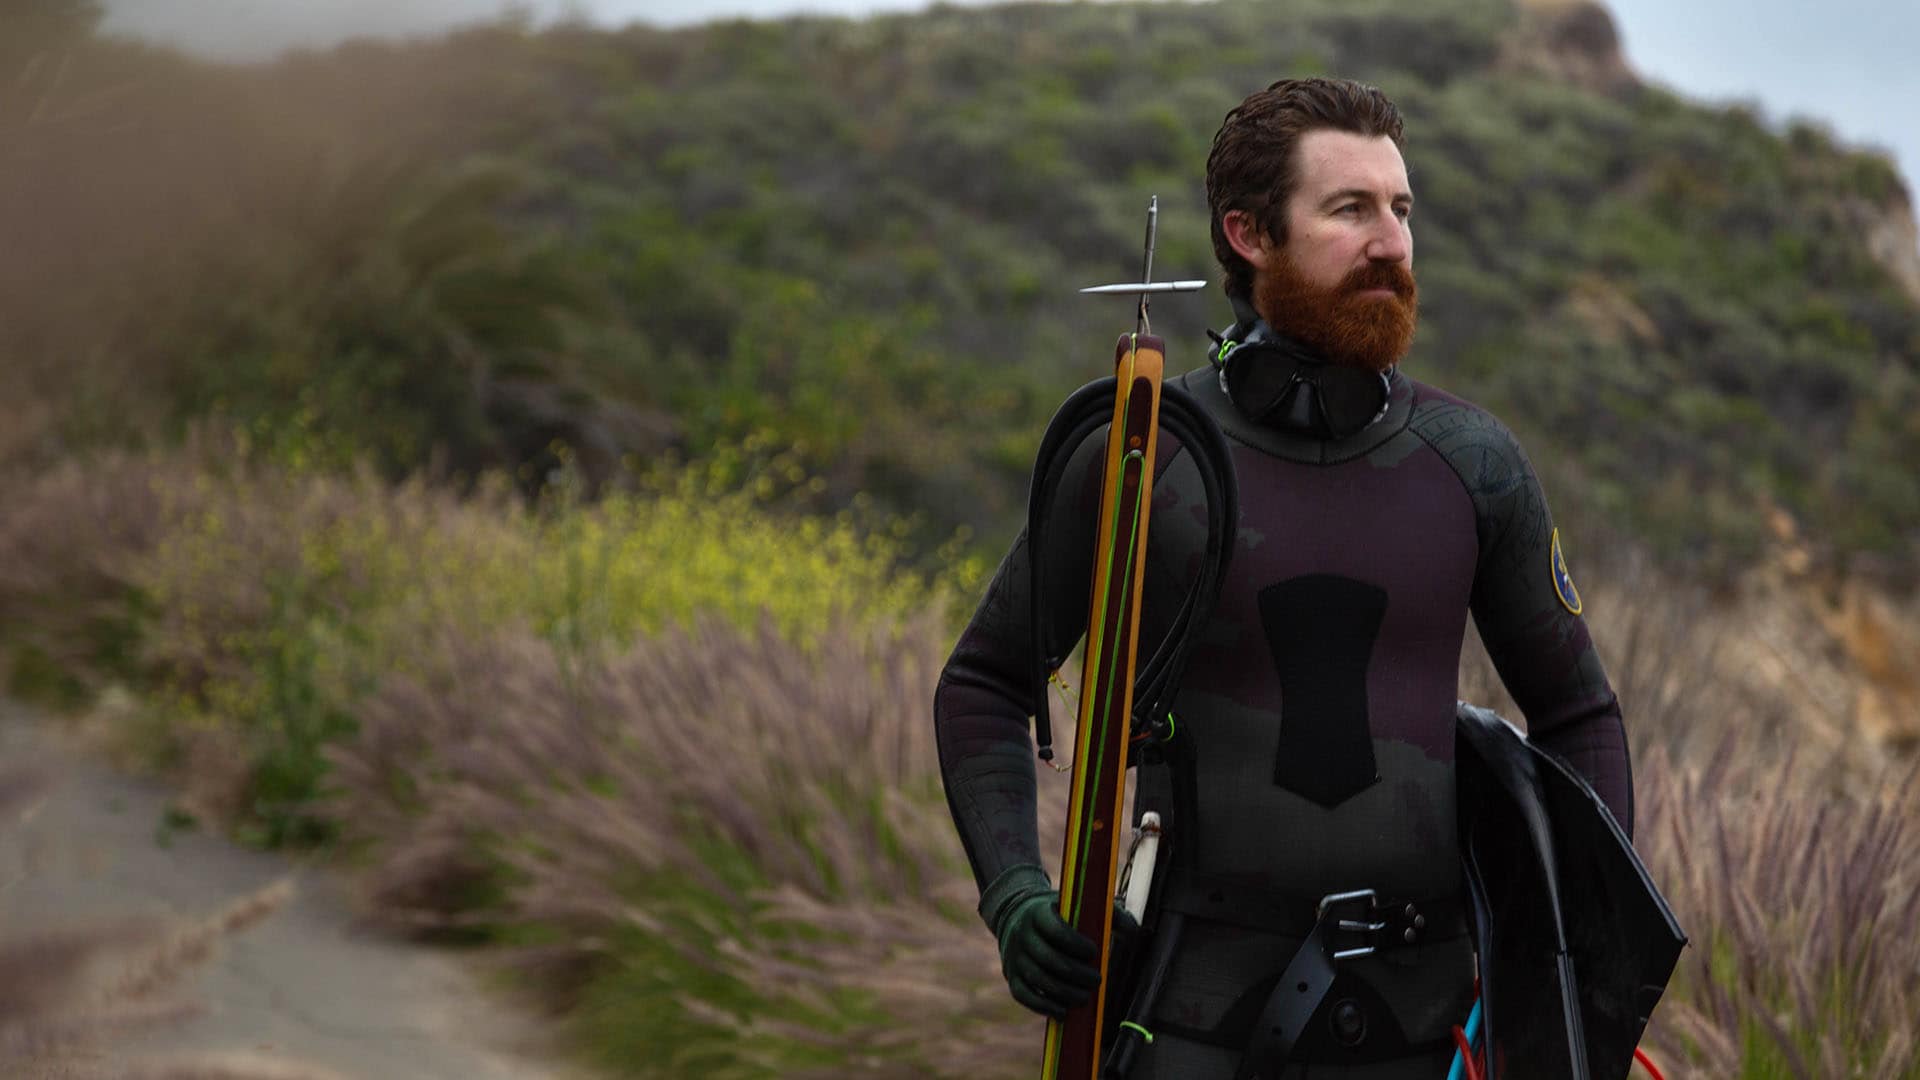 Adam Sachs prepares to go spearfishing off the coast of Santa Barbara, California.